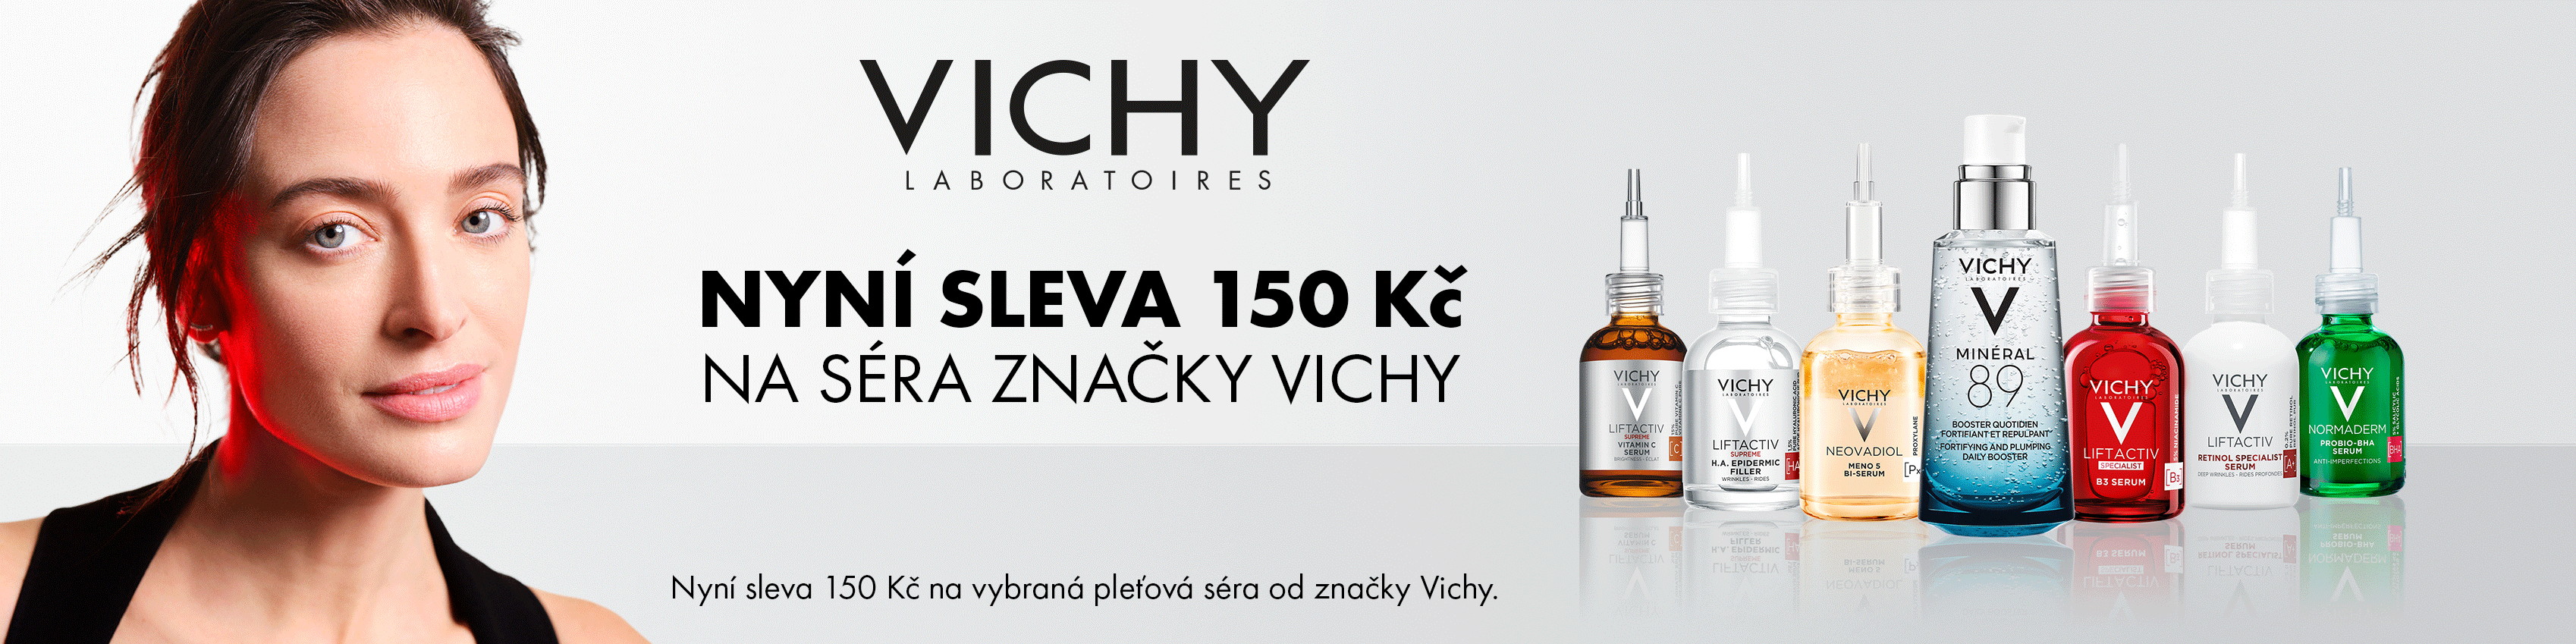 Vichy sérum -150 Kč